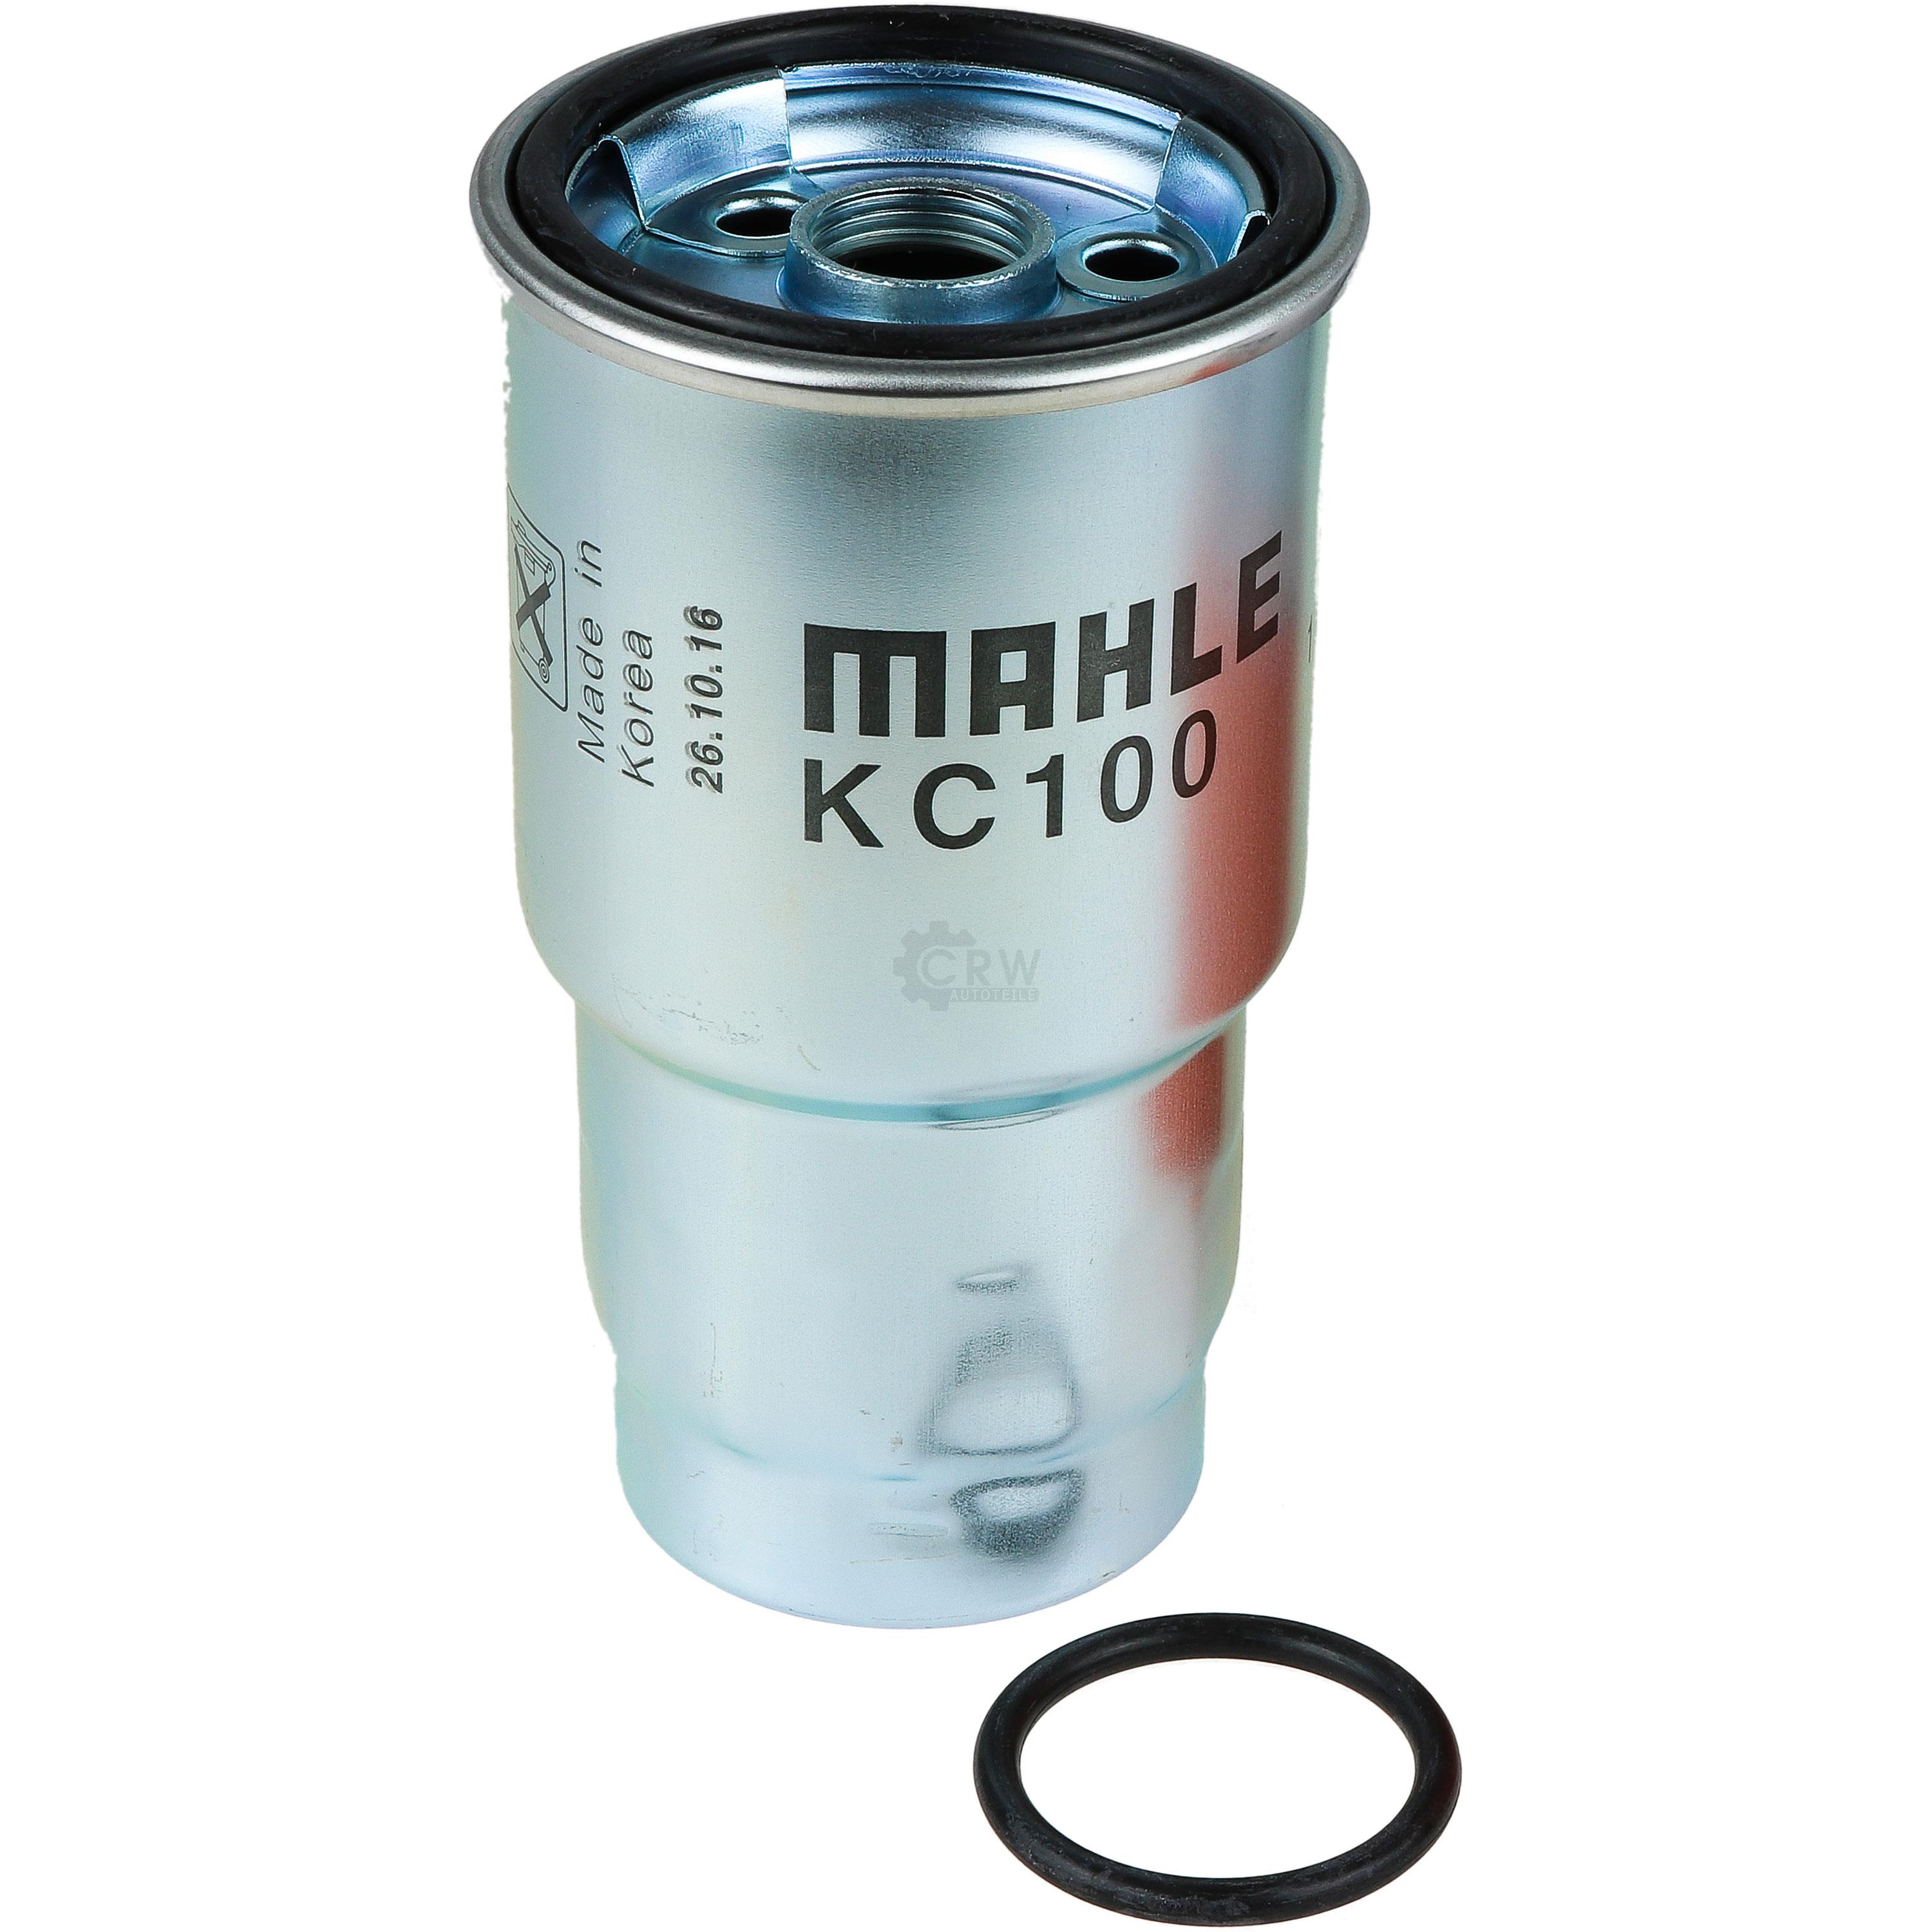 MAHLE / KNECHT Kraftstofffilter KC 100D Fuel Filter